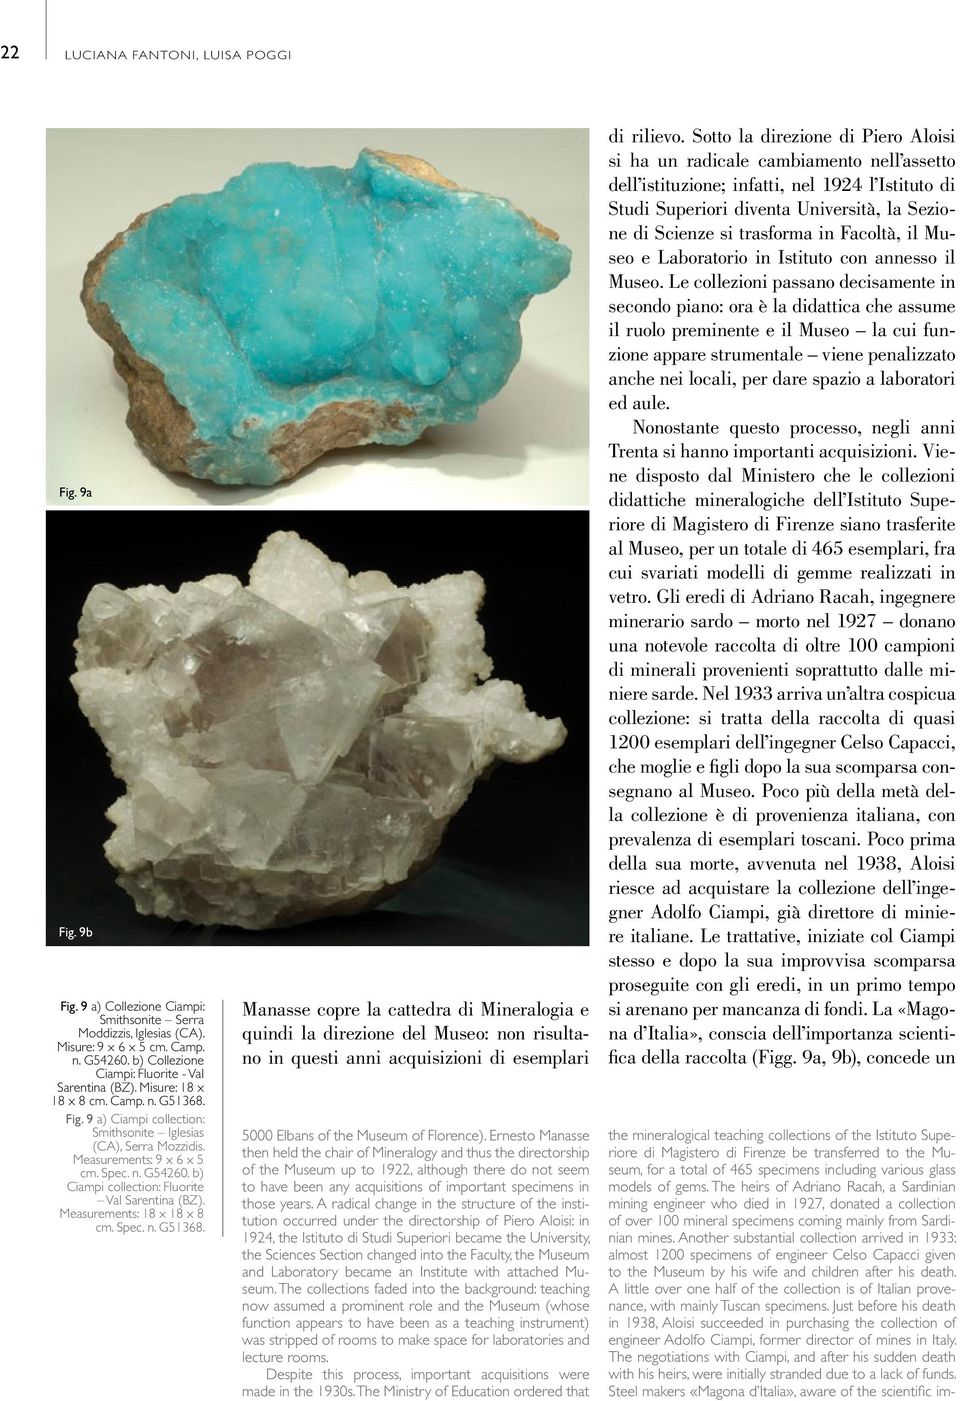 n. G54260. b) Ciampi collection: Fluorite Val Sarentina (BZ). Measurements: 18 x 18 x 8 cm. Spec. n. G51368.